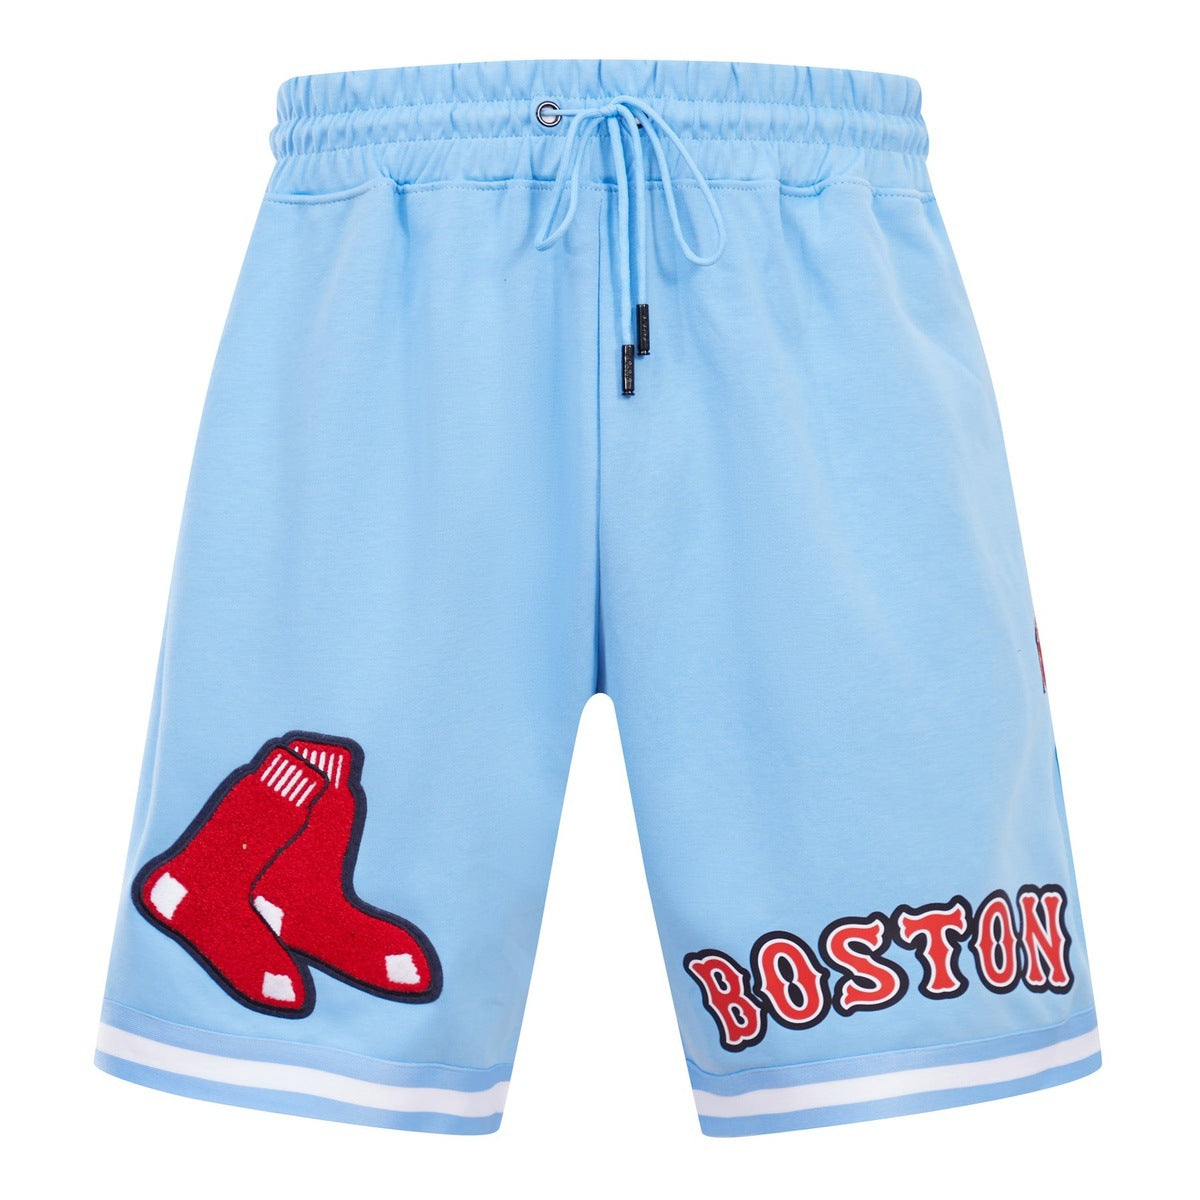 BOSTON RED SOX CLASSIC CHENILLE DK SHORT (UNIVERSITY BLUE)